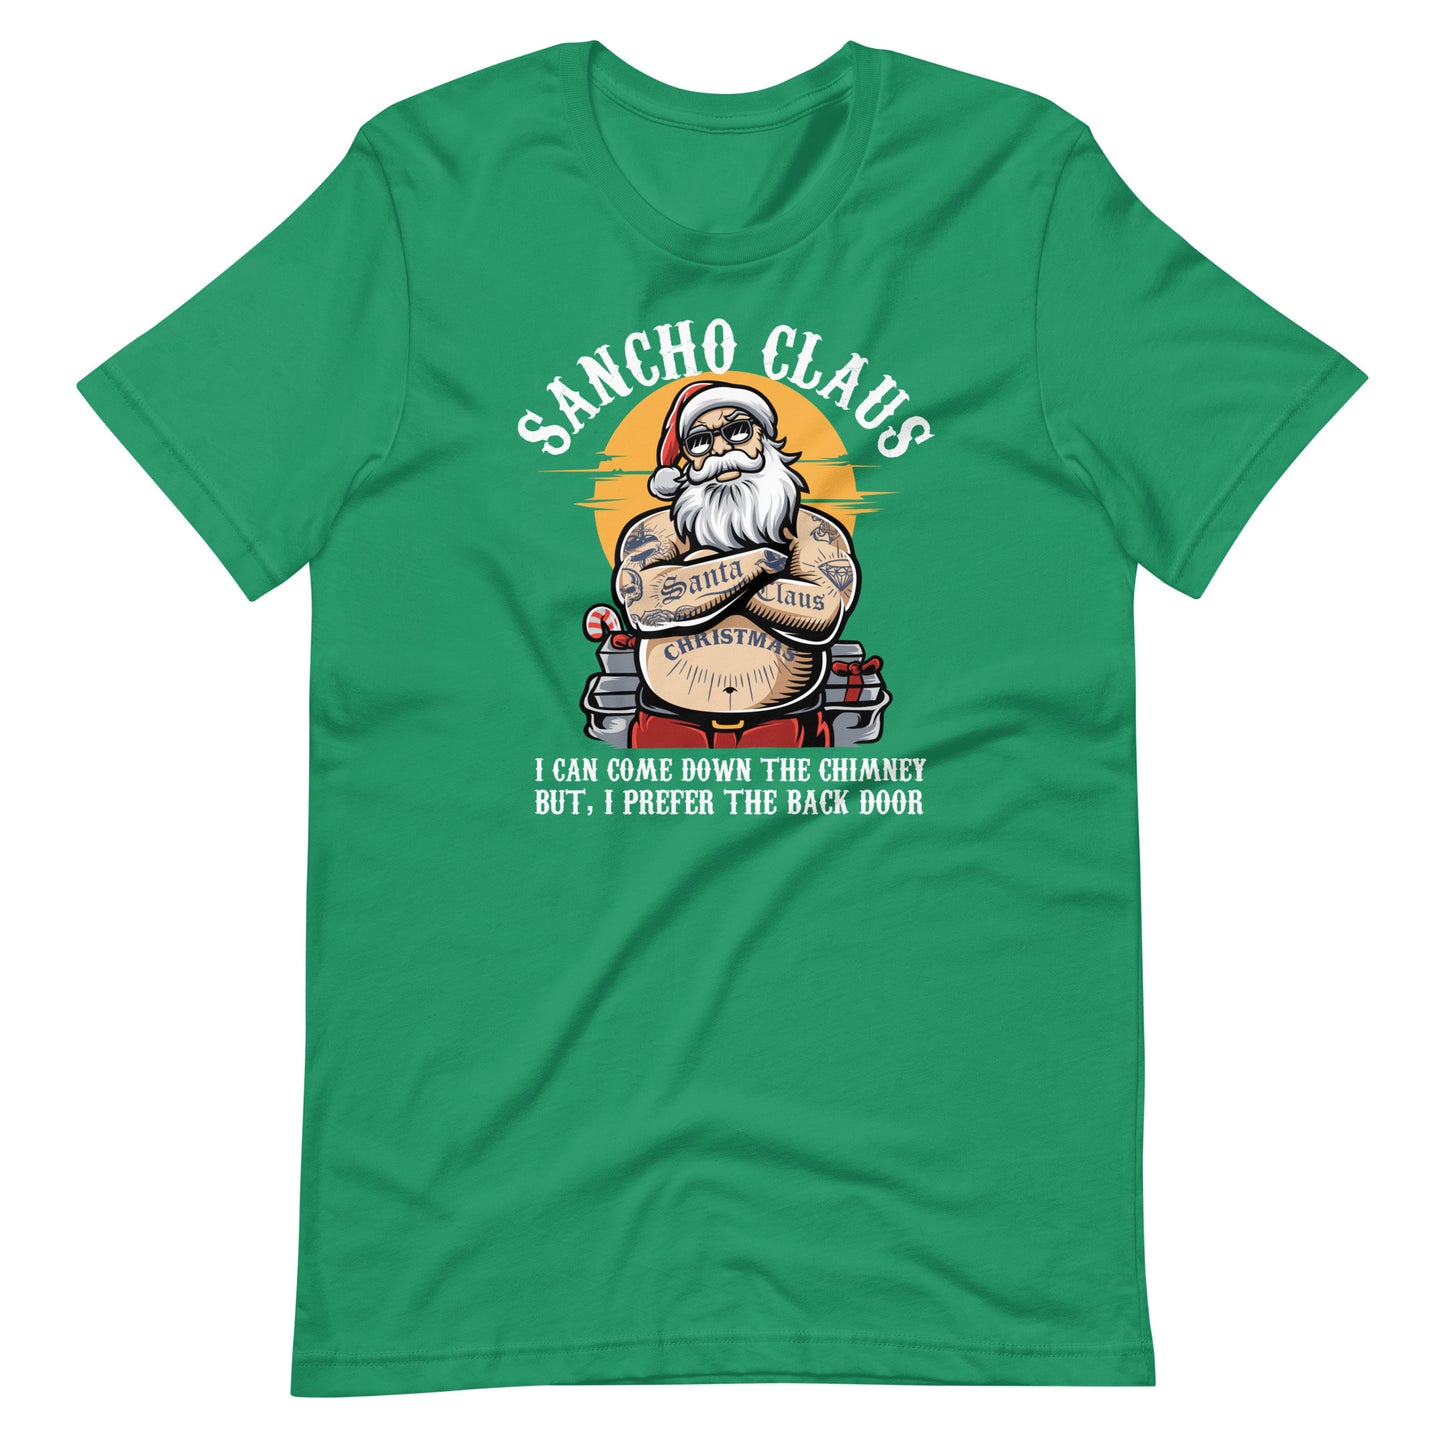 Sancho Claus I Prefer the Back Door Christmas T-Shirt